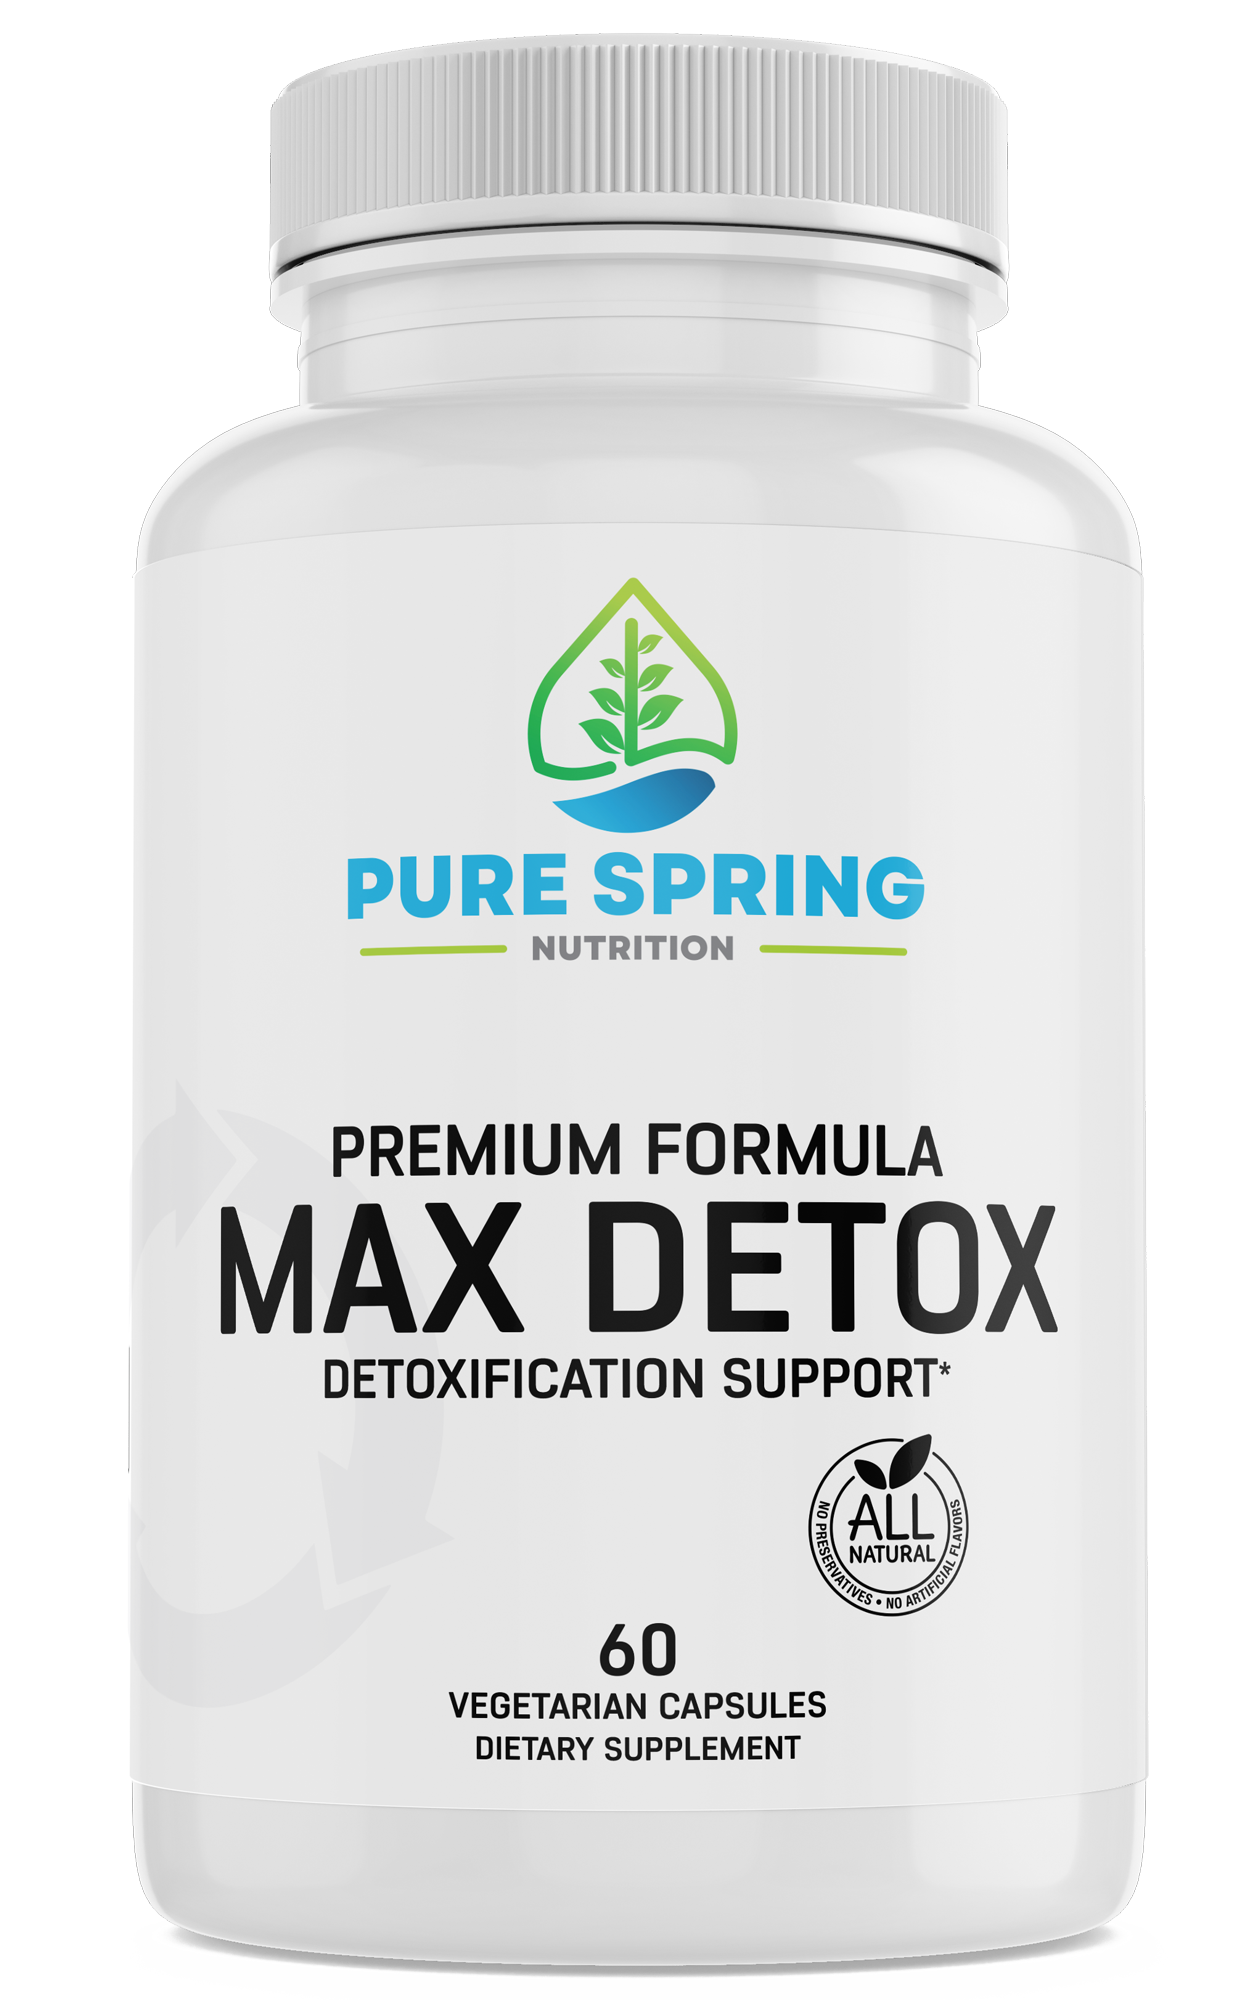 Max Detox - Premium Formula